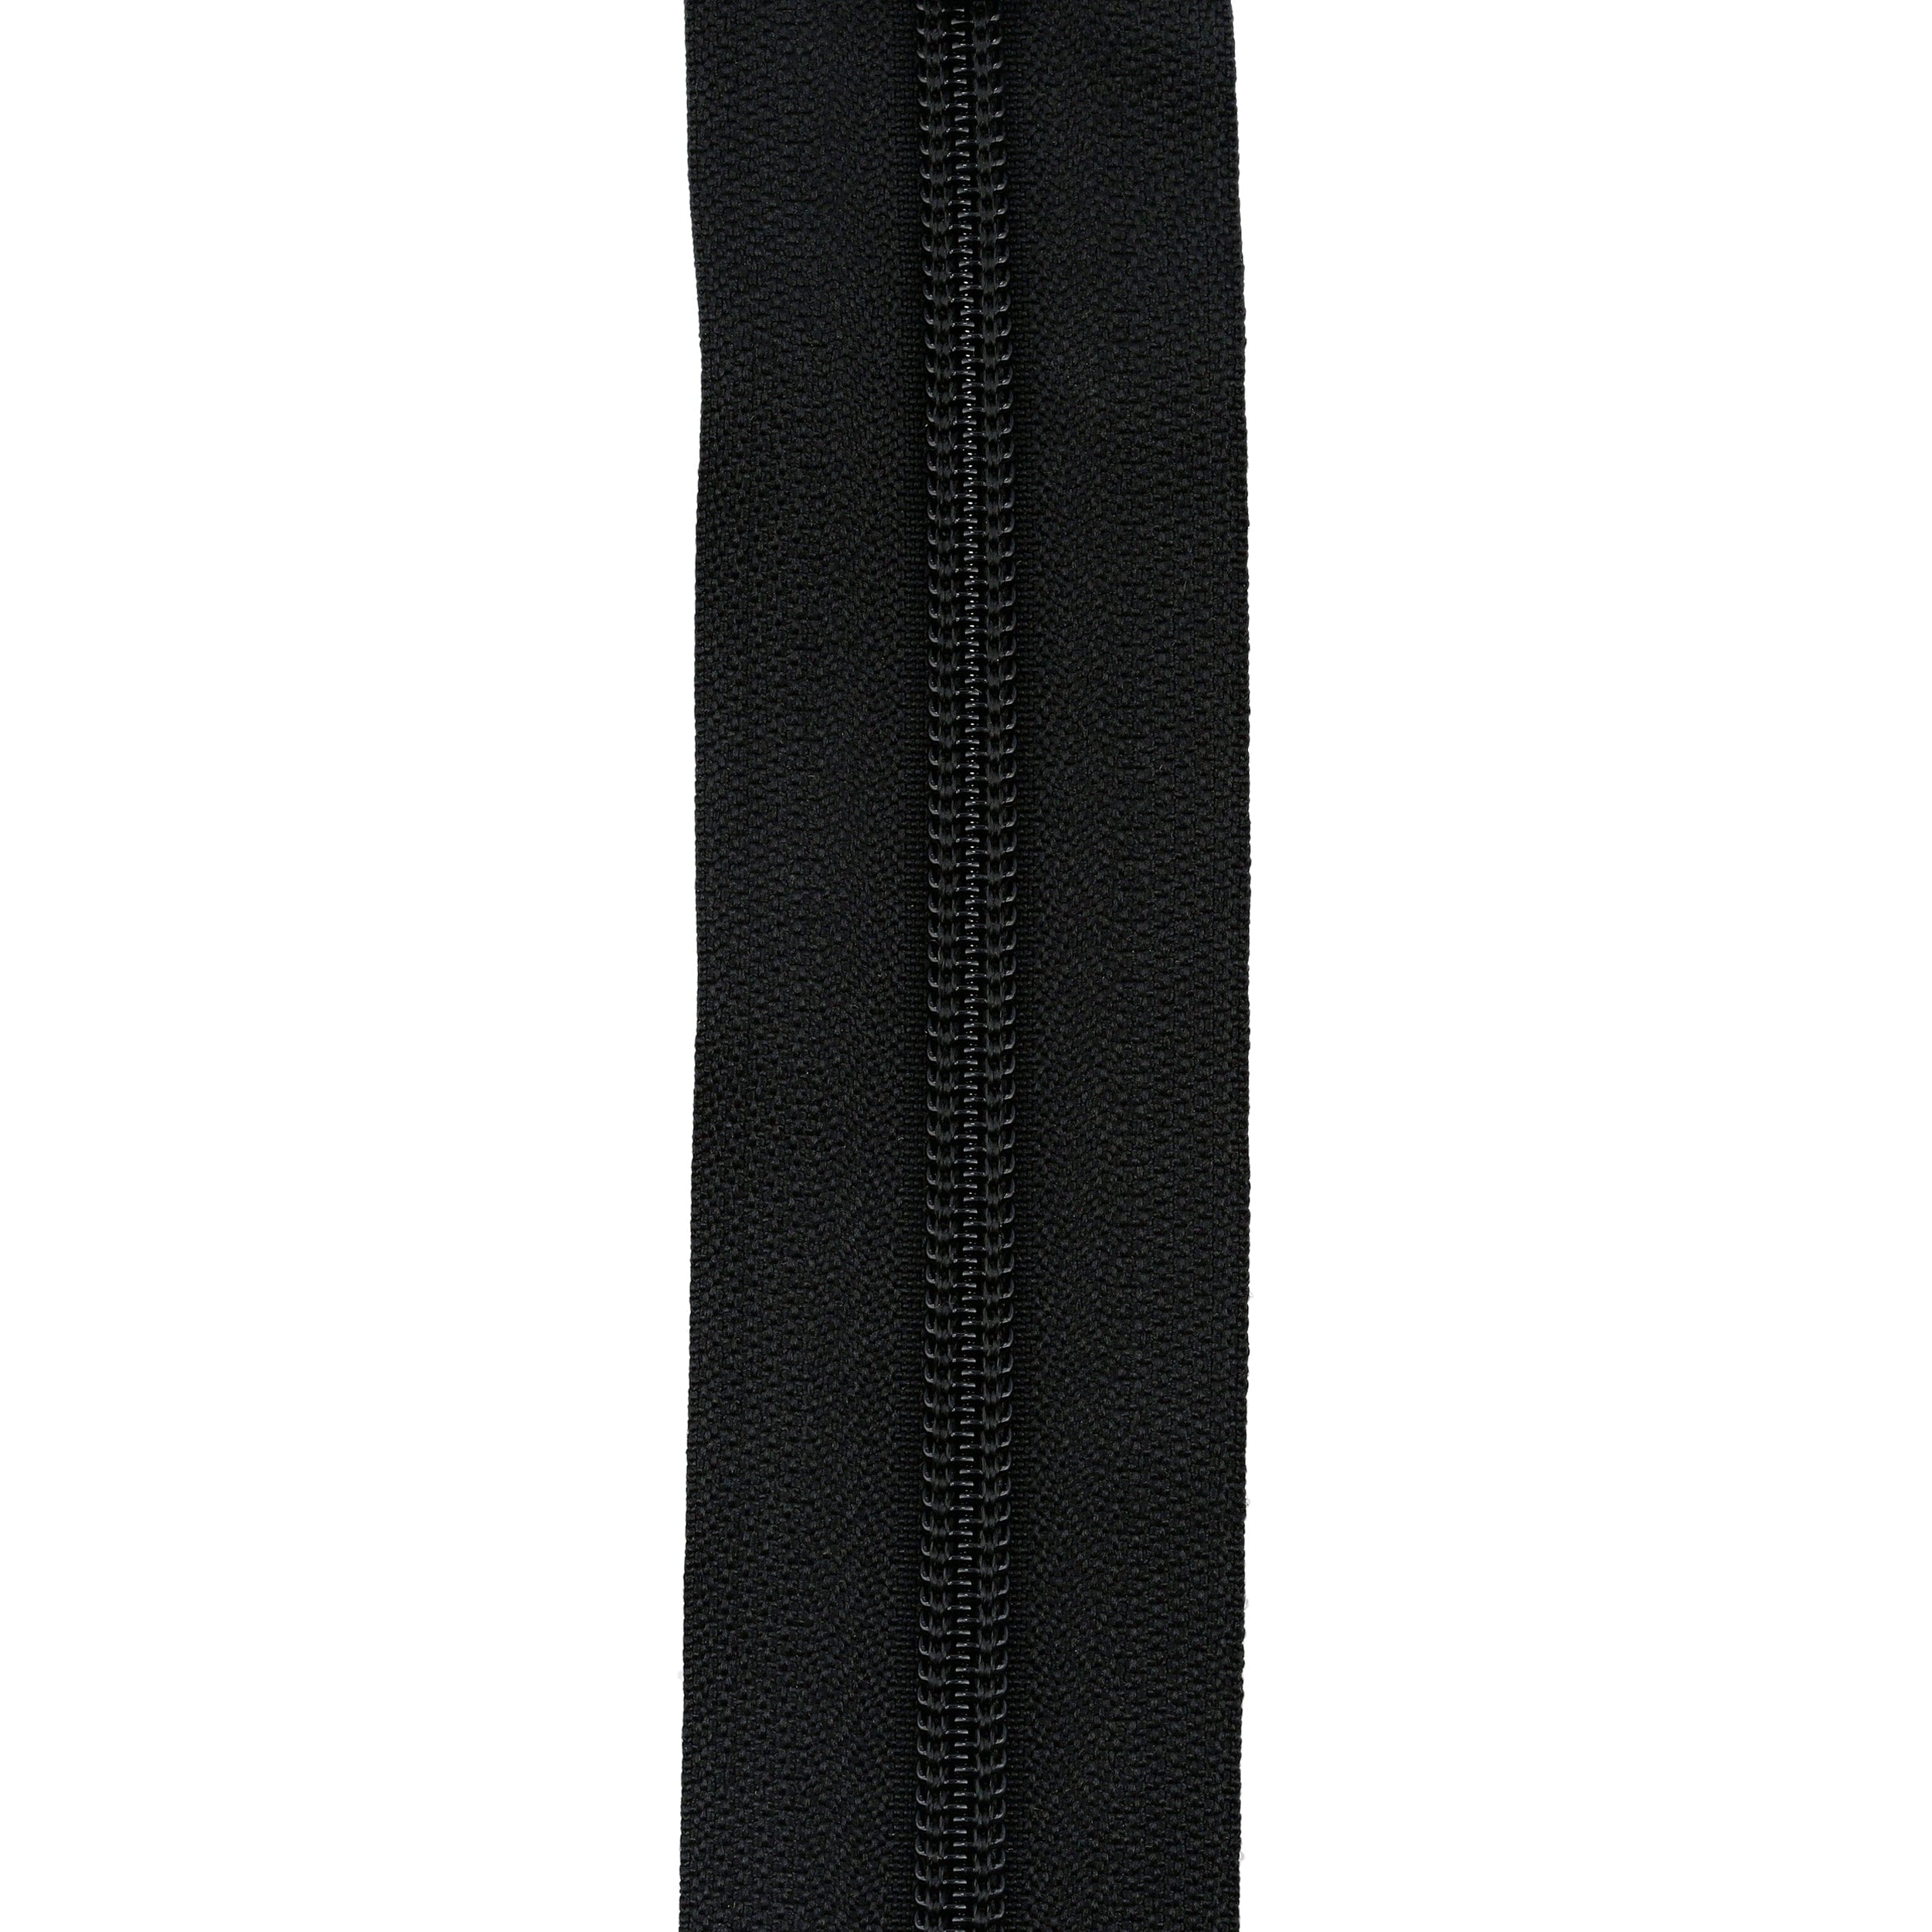 Ohio Travel Bag Zippers #5 Black, 8" Coil Boot Zipper, Nylon, #560-8-BLK 560-8-BLK